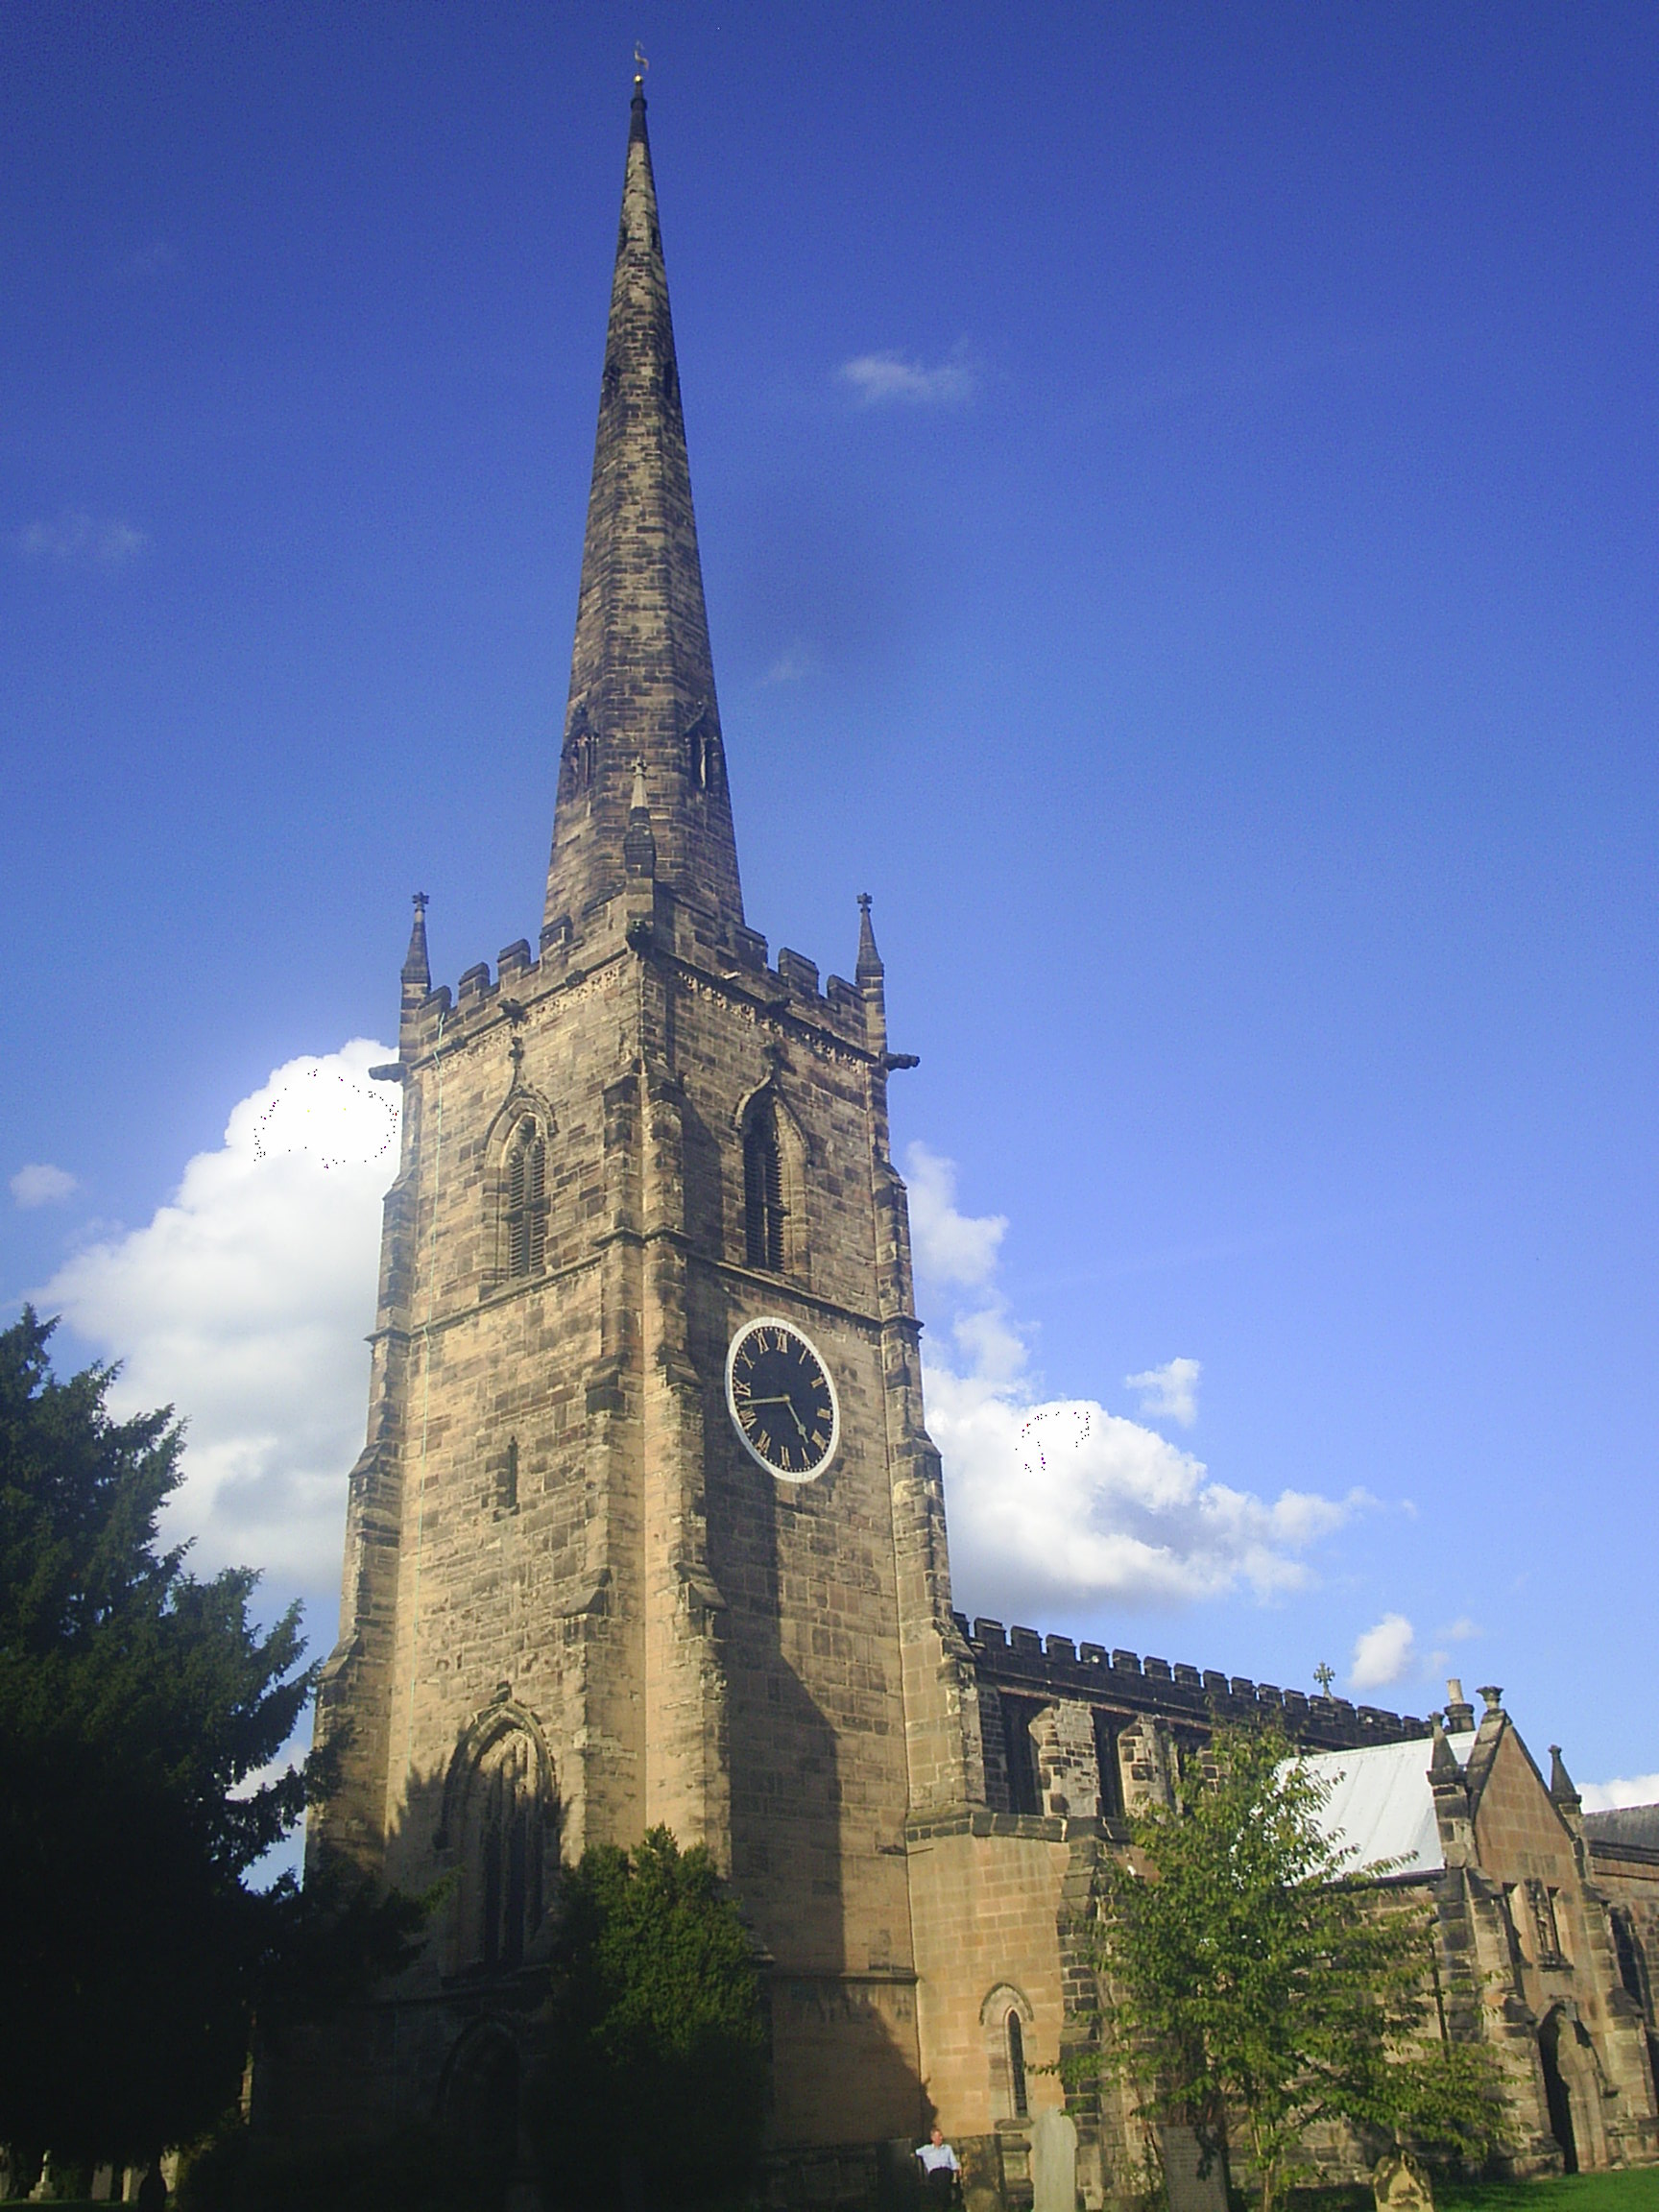 St Wystan's Church, Repton